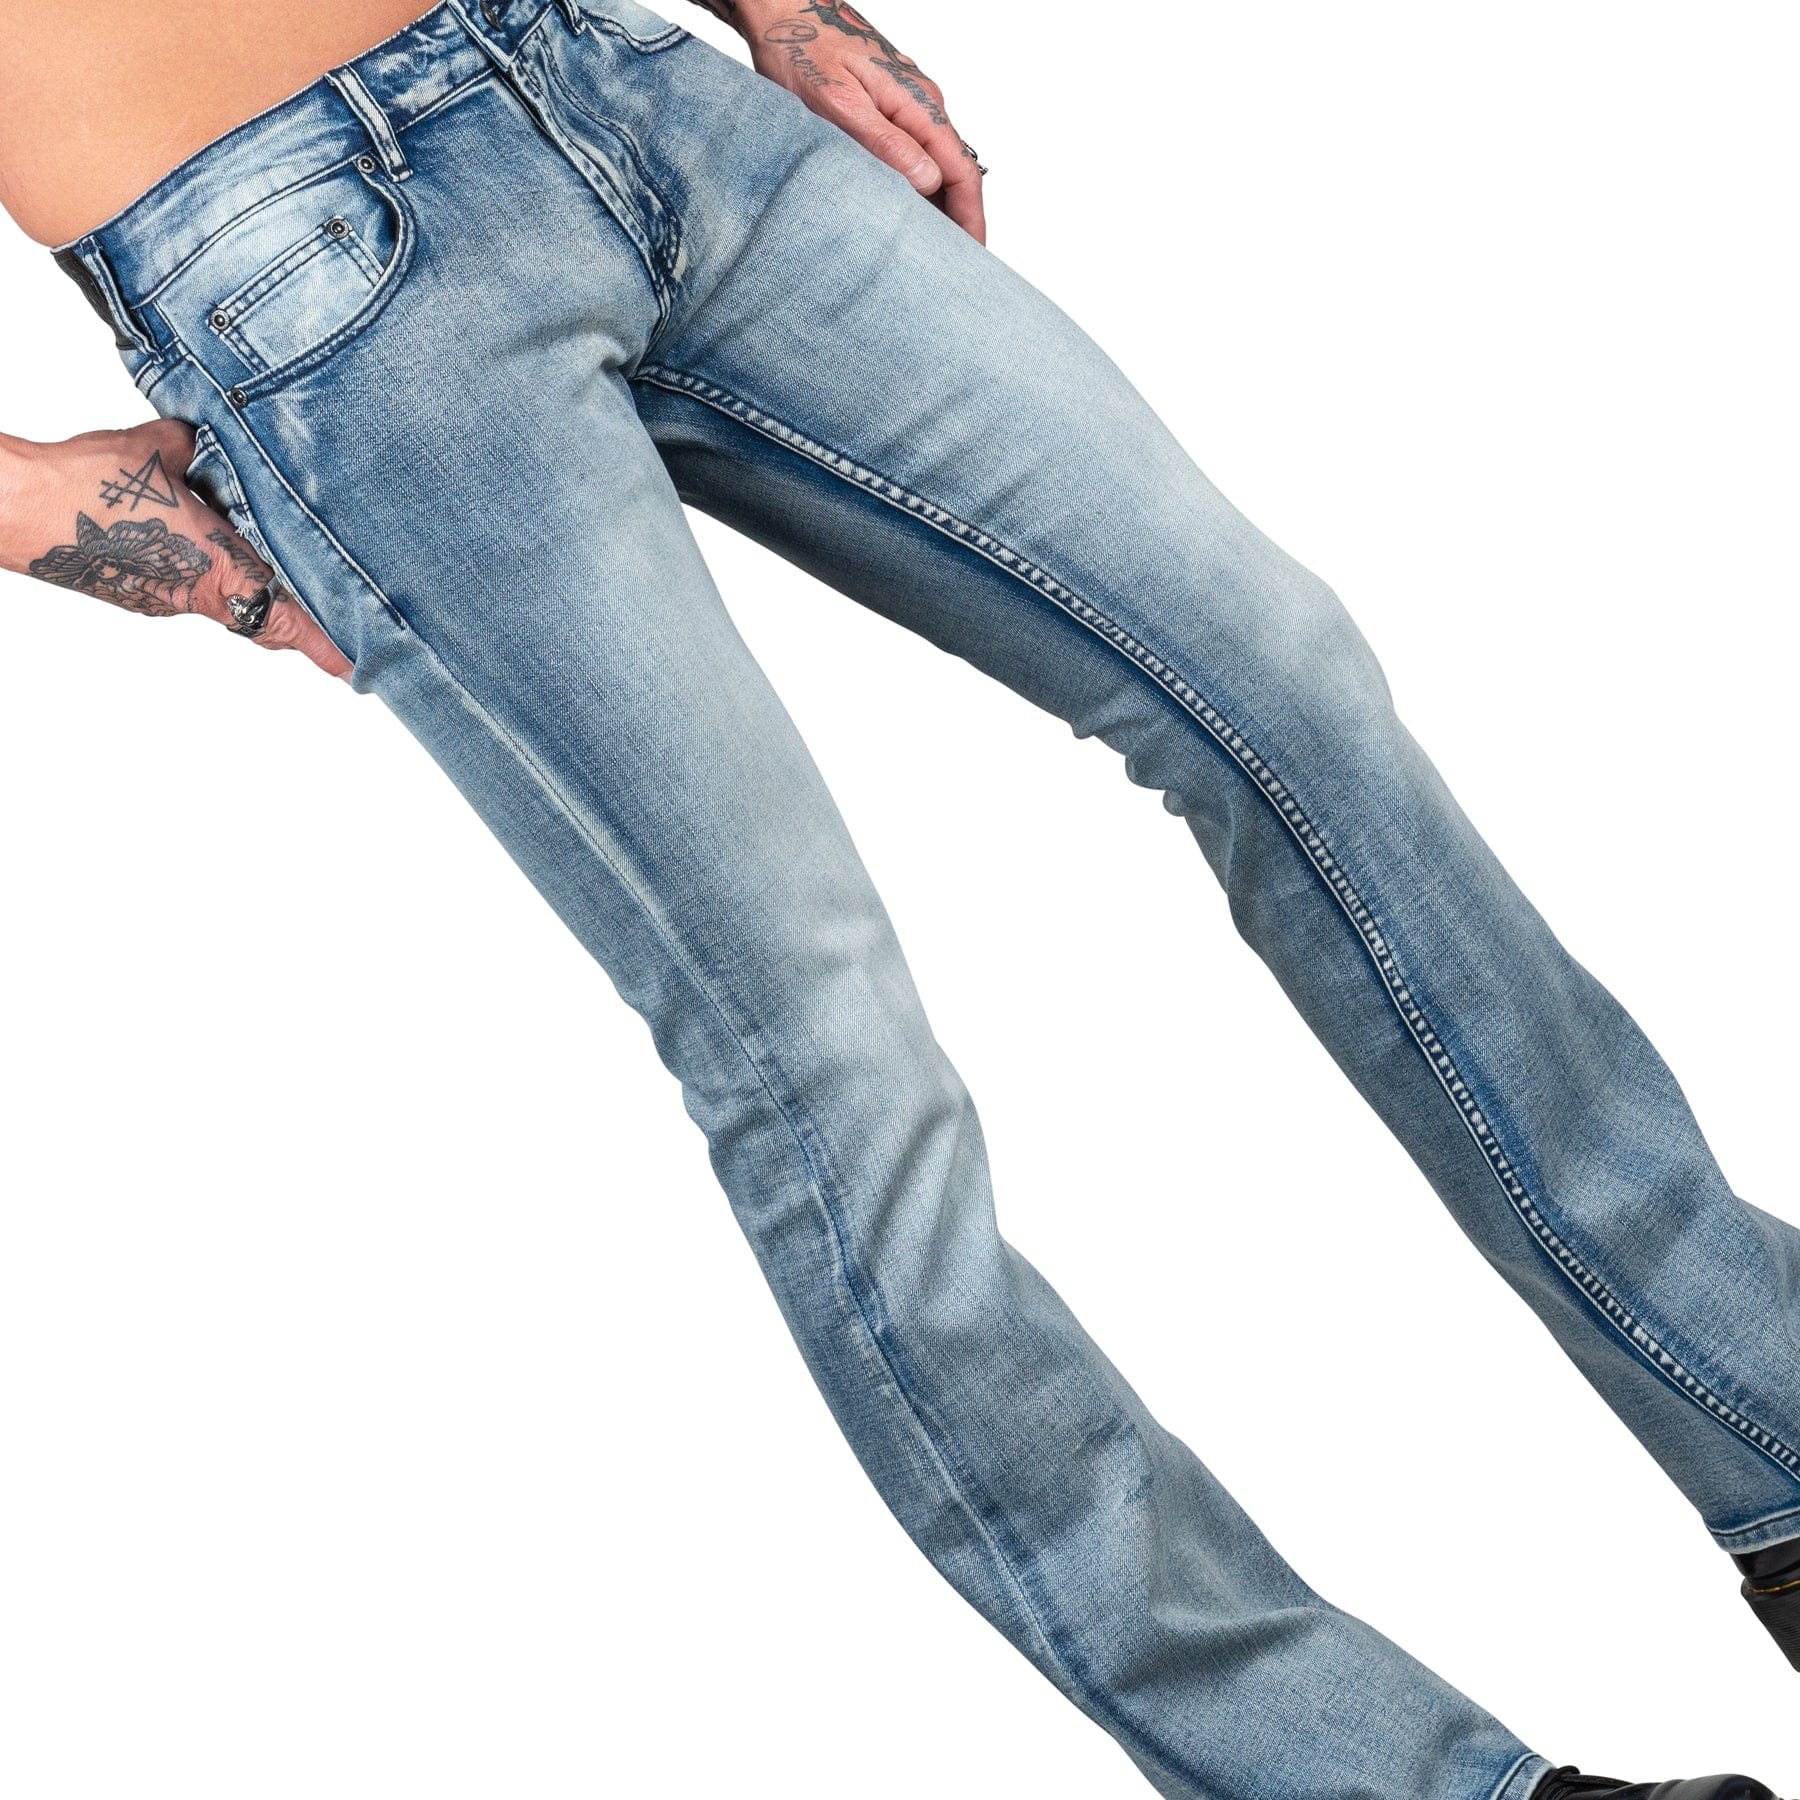 Wornstar Clothing Mens Jeans Hellraiser Denim Pants - Classic Blue